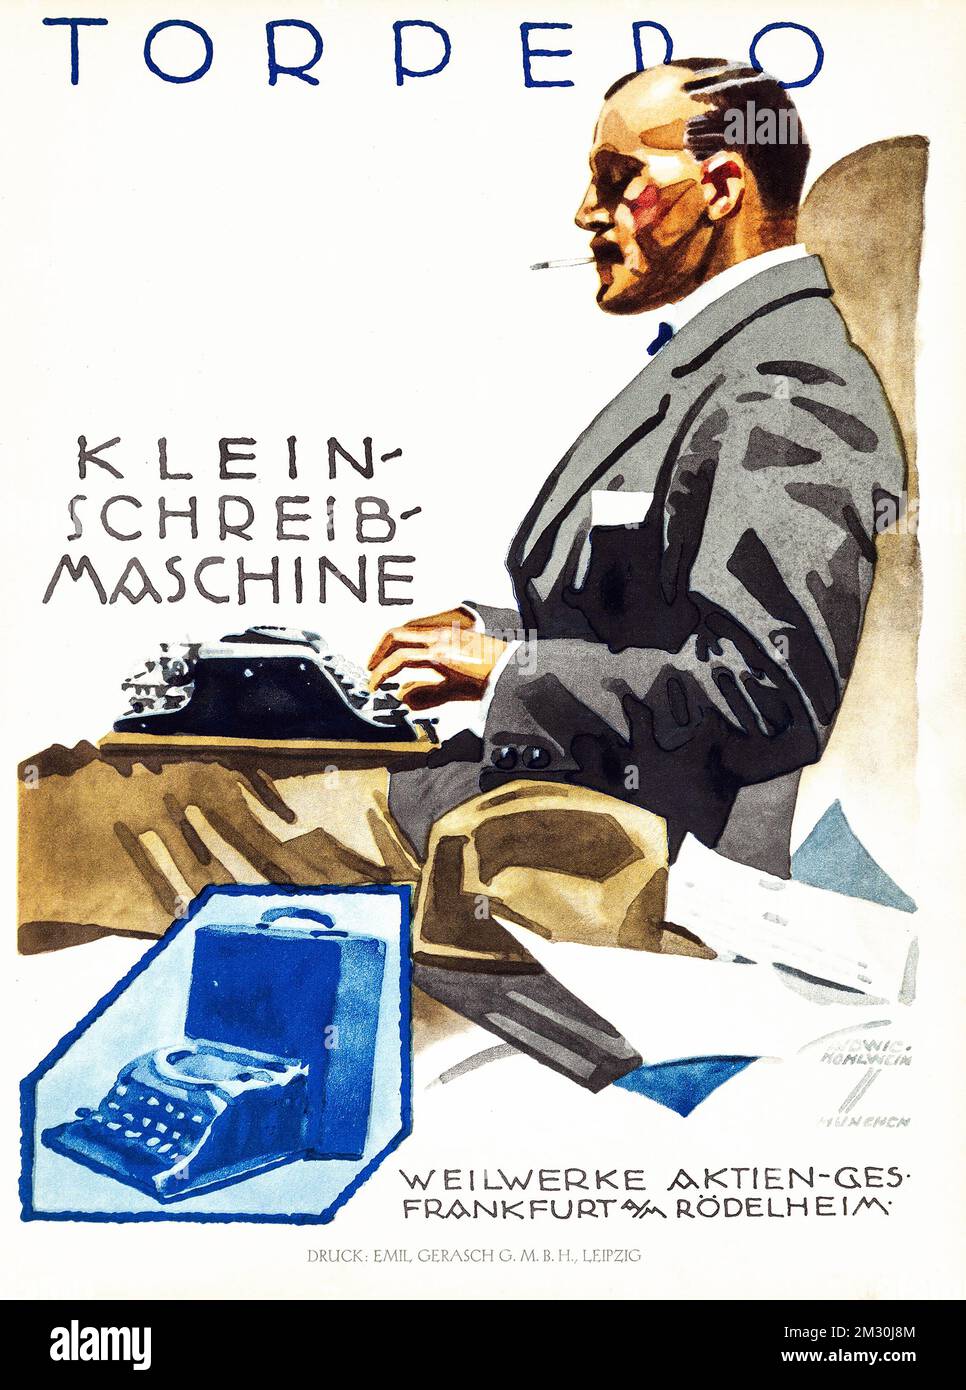 Vintage german poster - Advertising poster for Torpedo typewriters - Klein-Schreib Maschine Torpedo 1920s - Ludwig Hohlwein poster Stock Photo